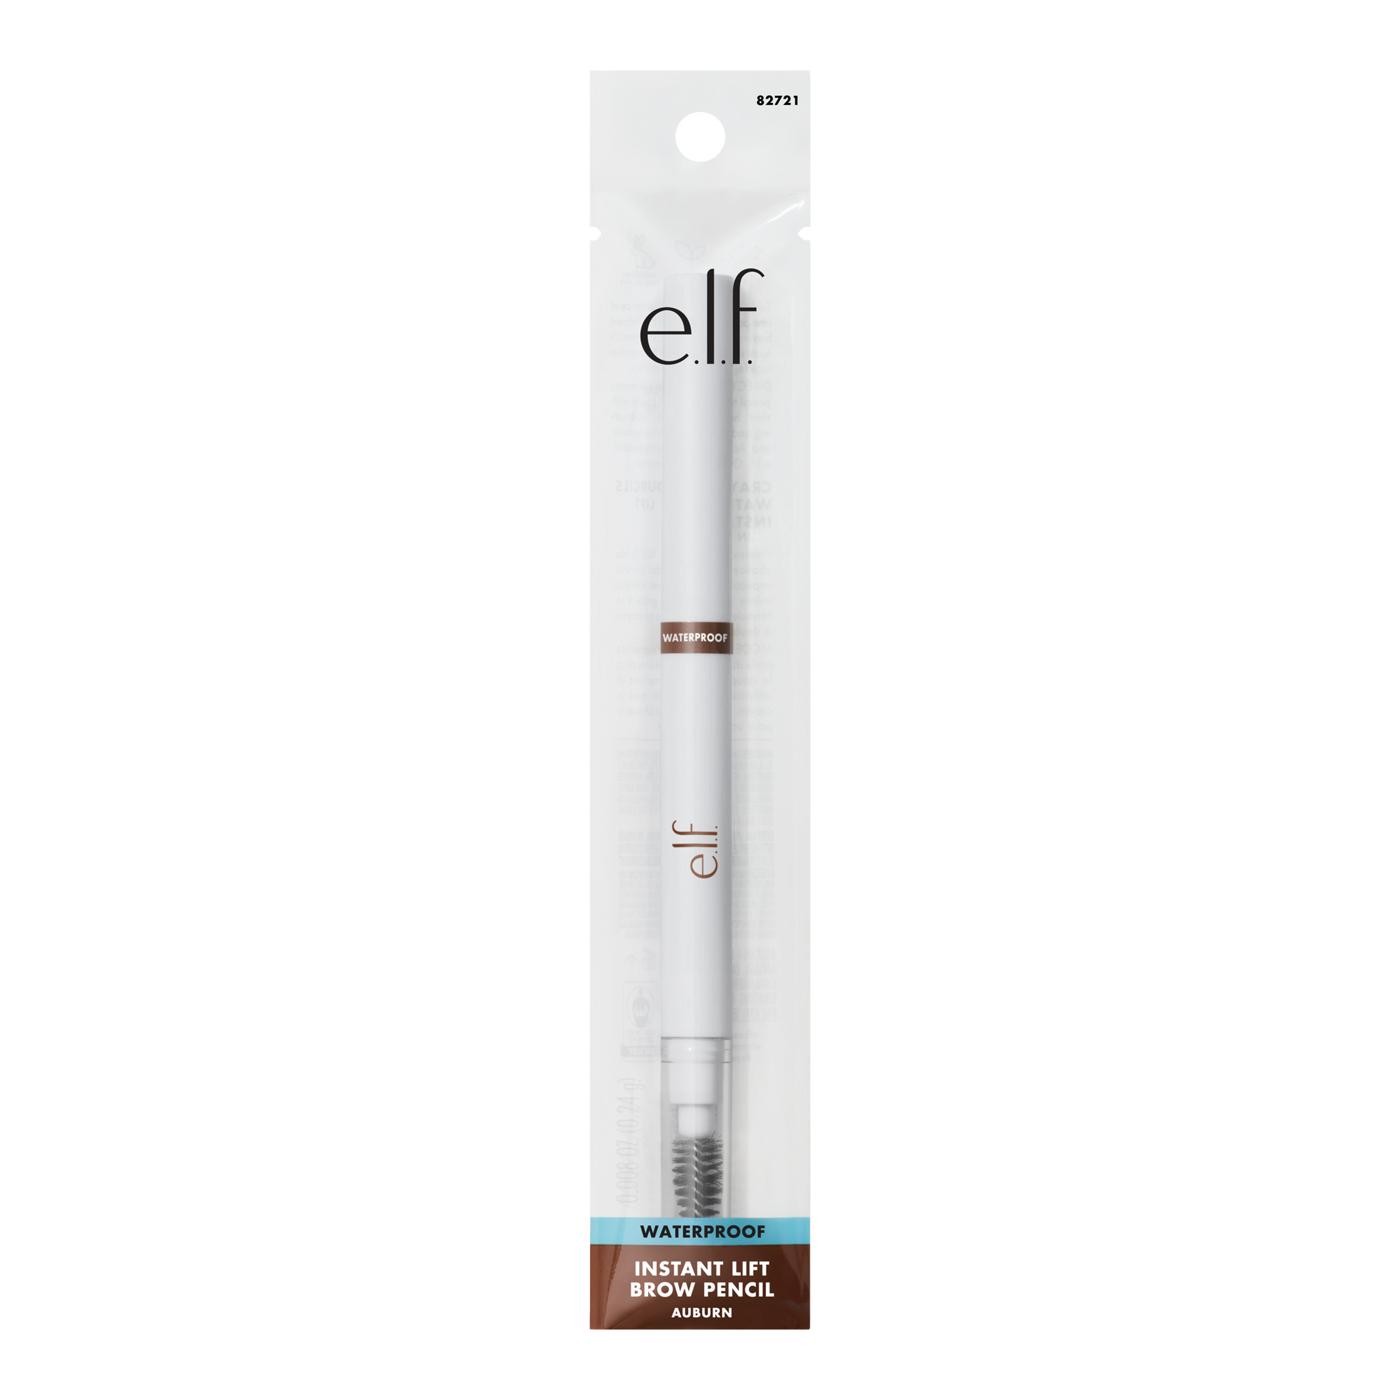 e.l.f. Instant Lift Brow Pencil Waterproof  - Auburn; image 1 of 2